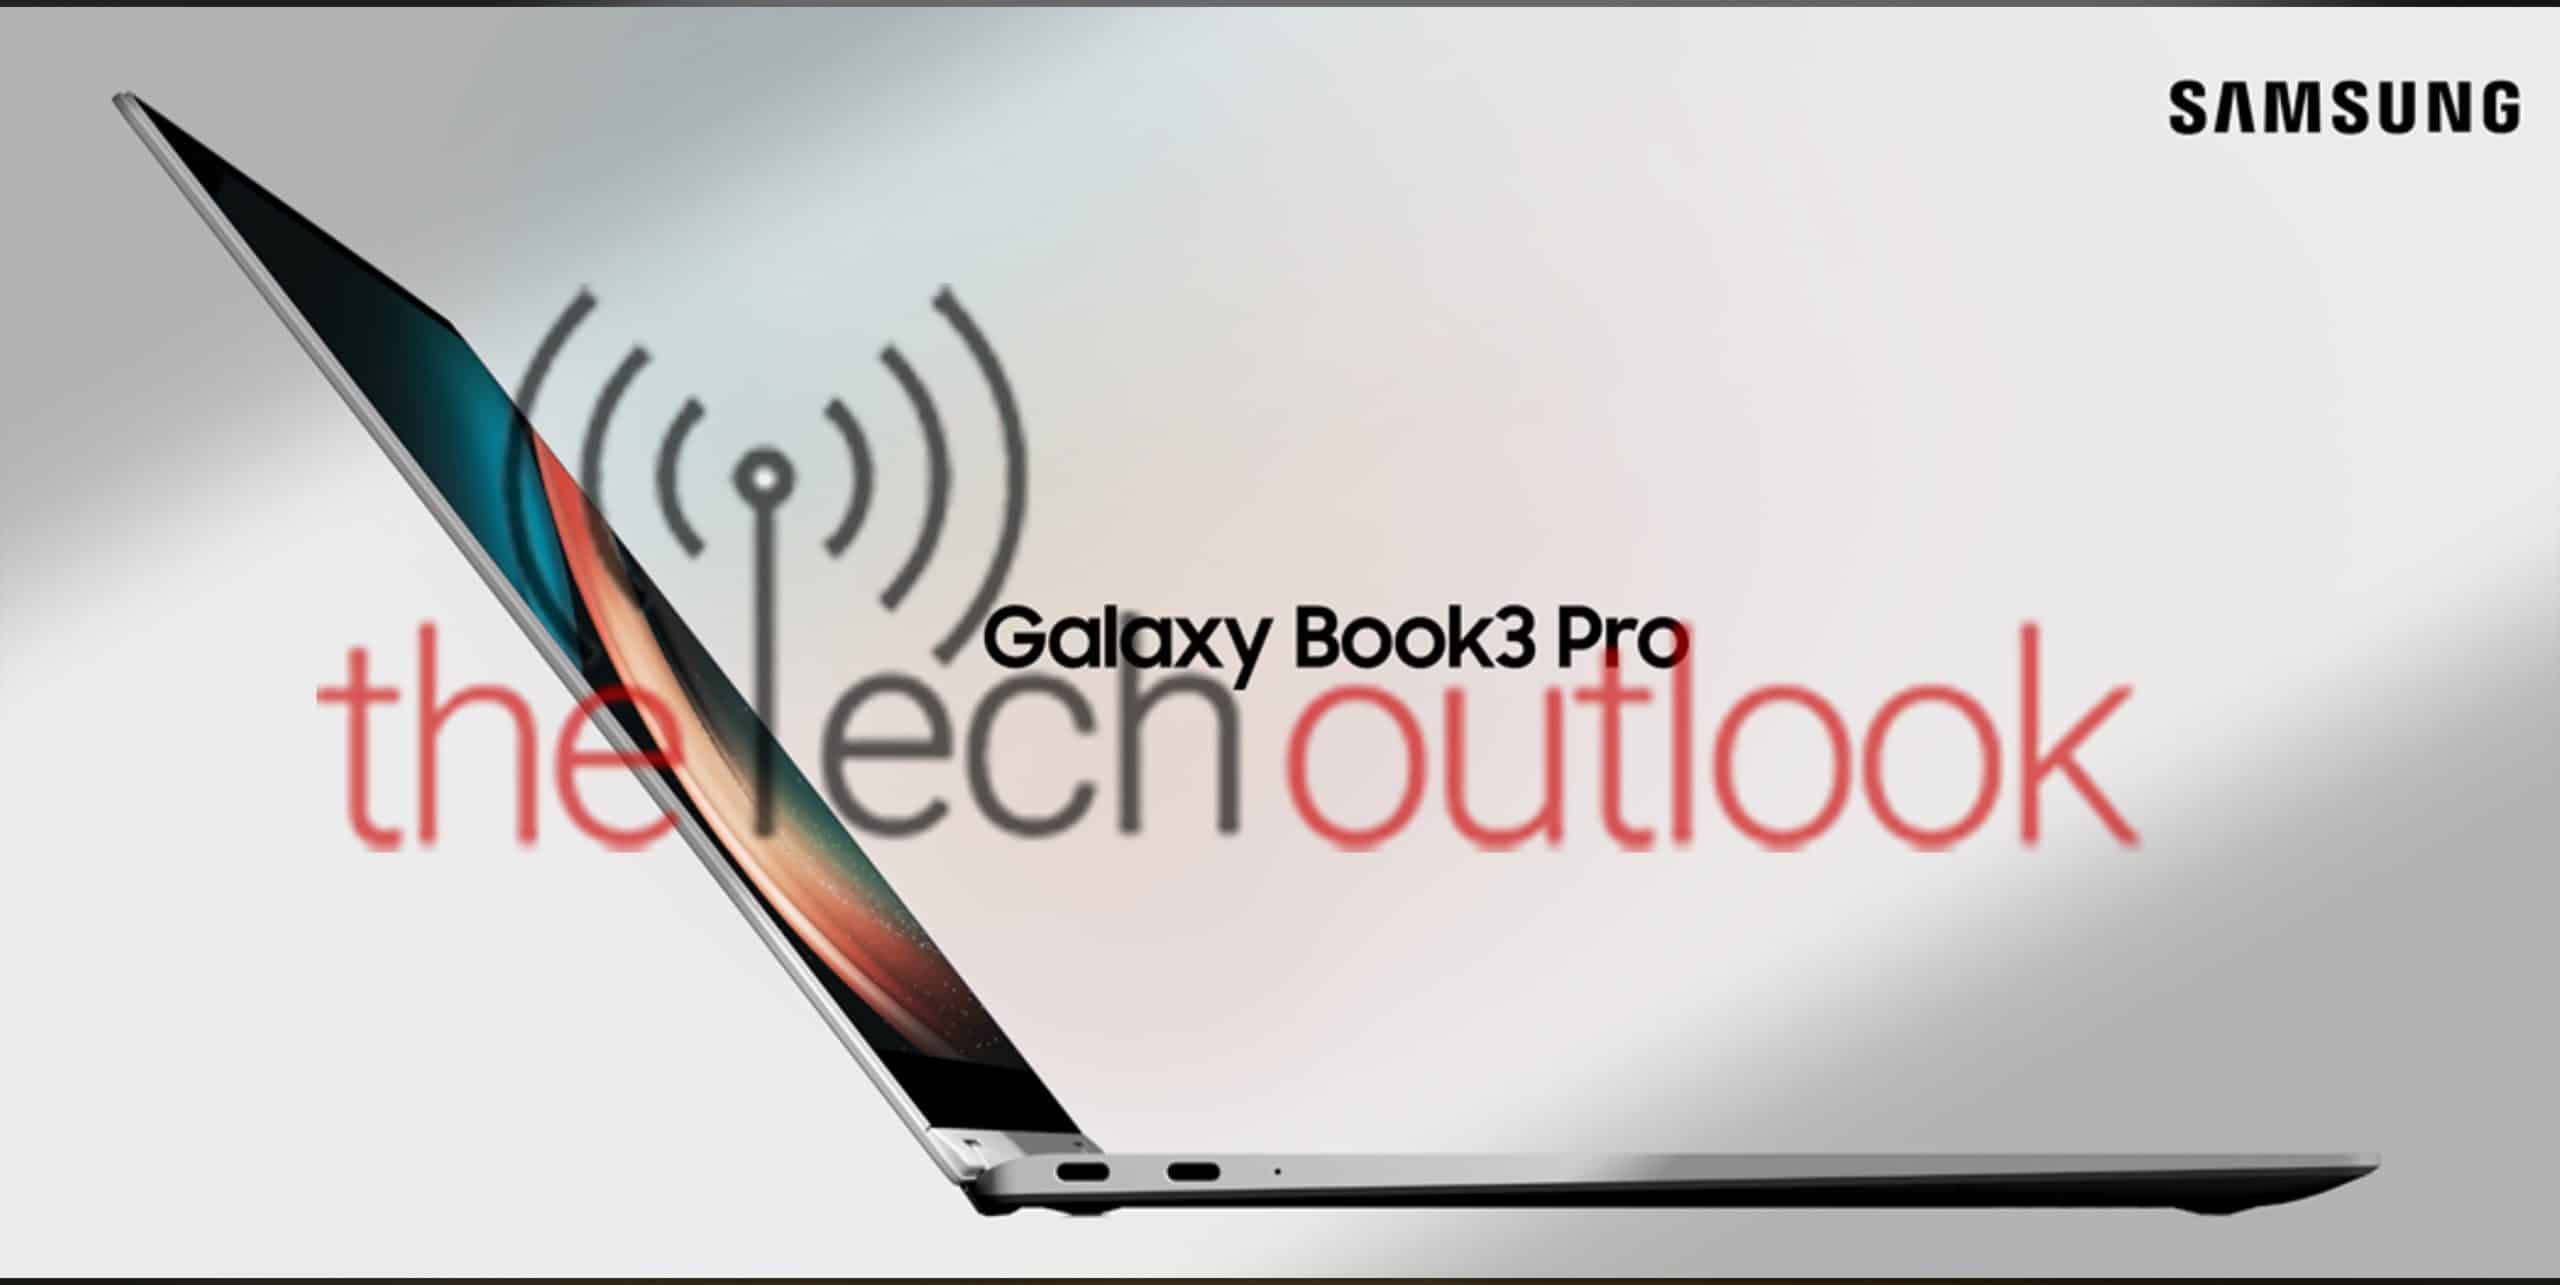 Samsung Galaxy Book 3 Pro